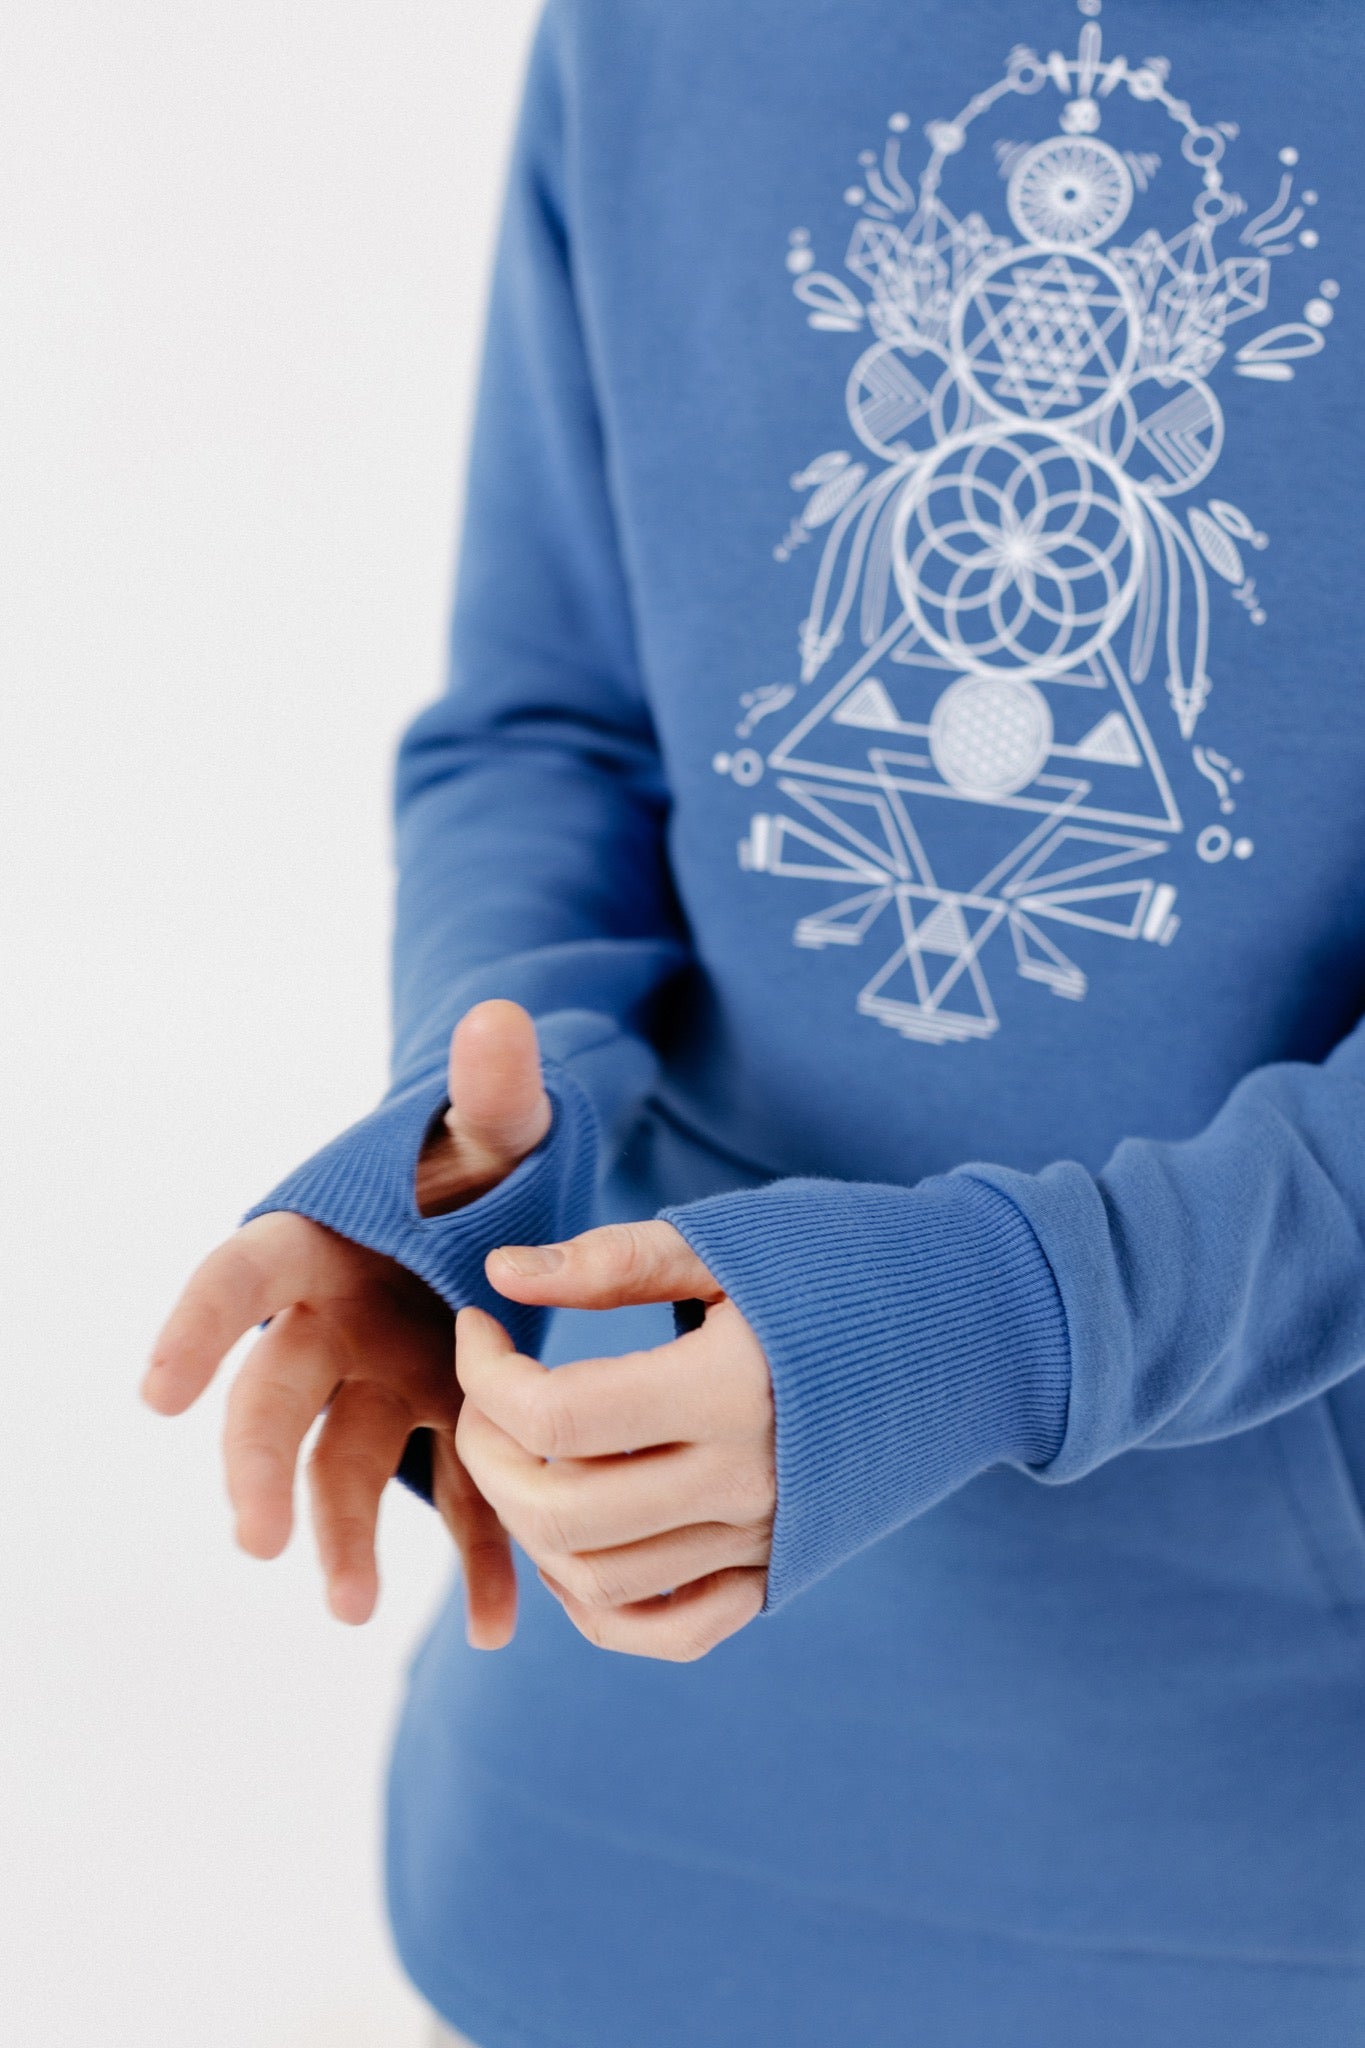 Mėlynas džemperis "Sacred geometry"